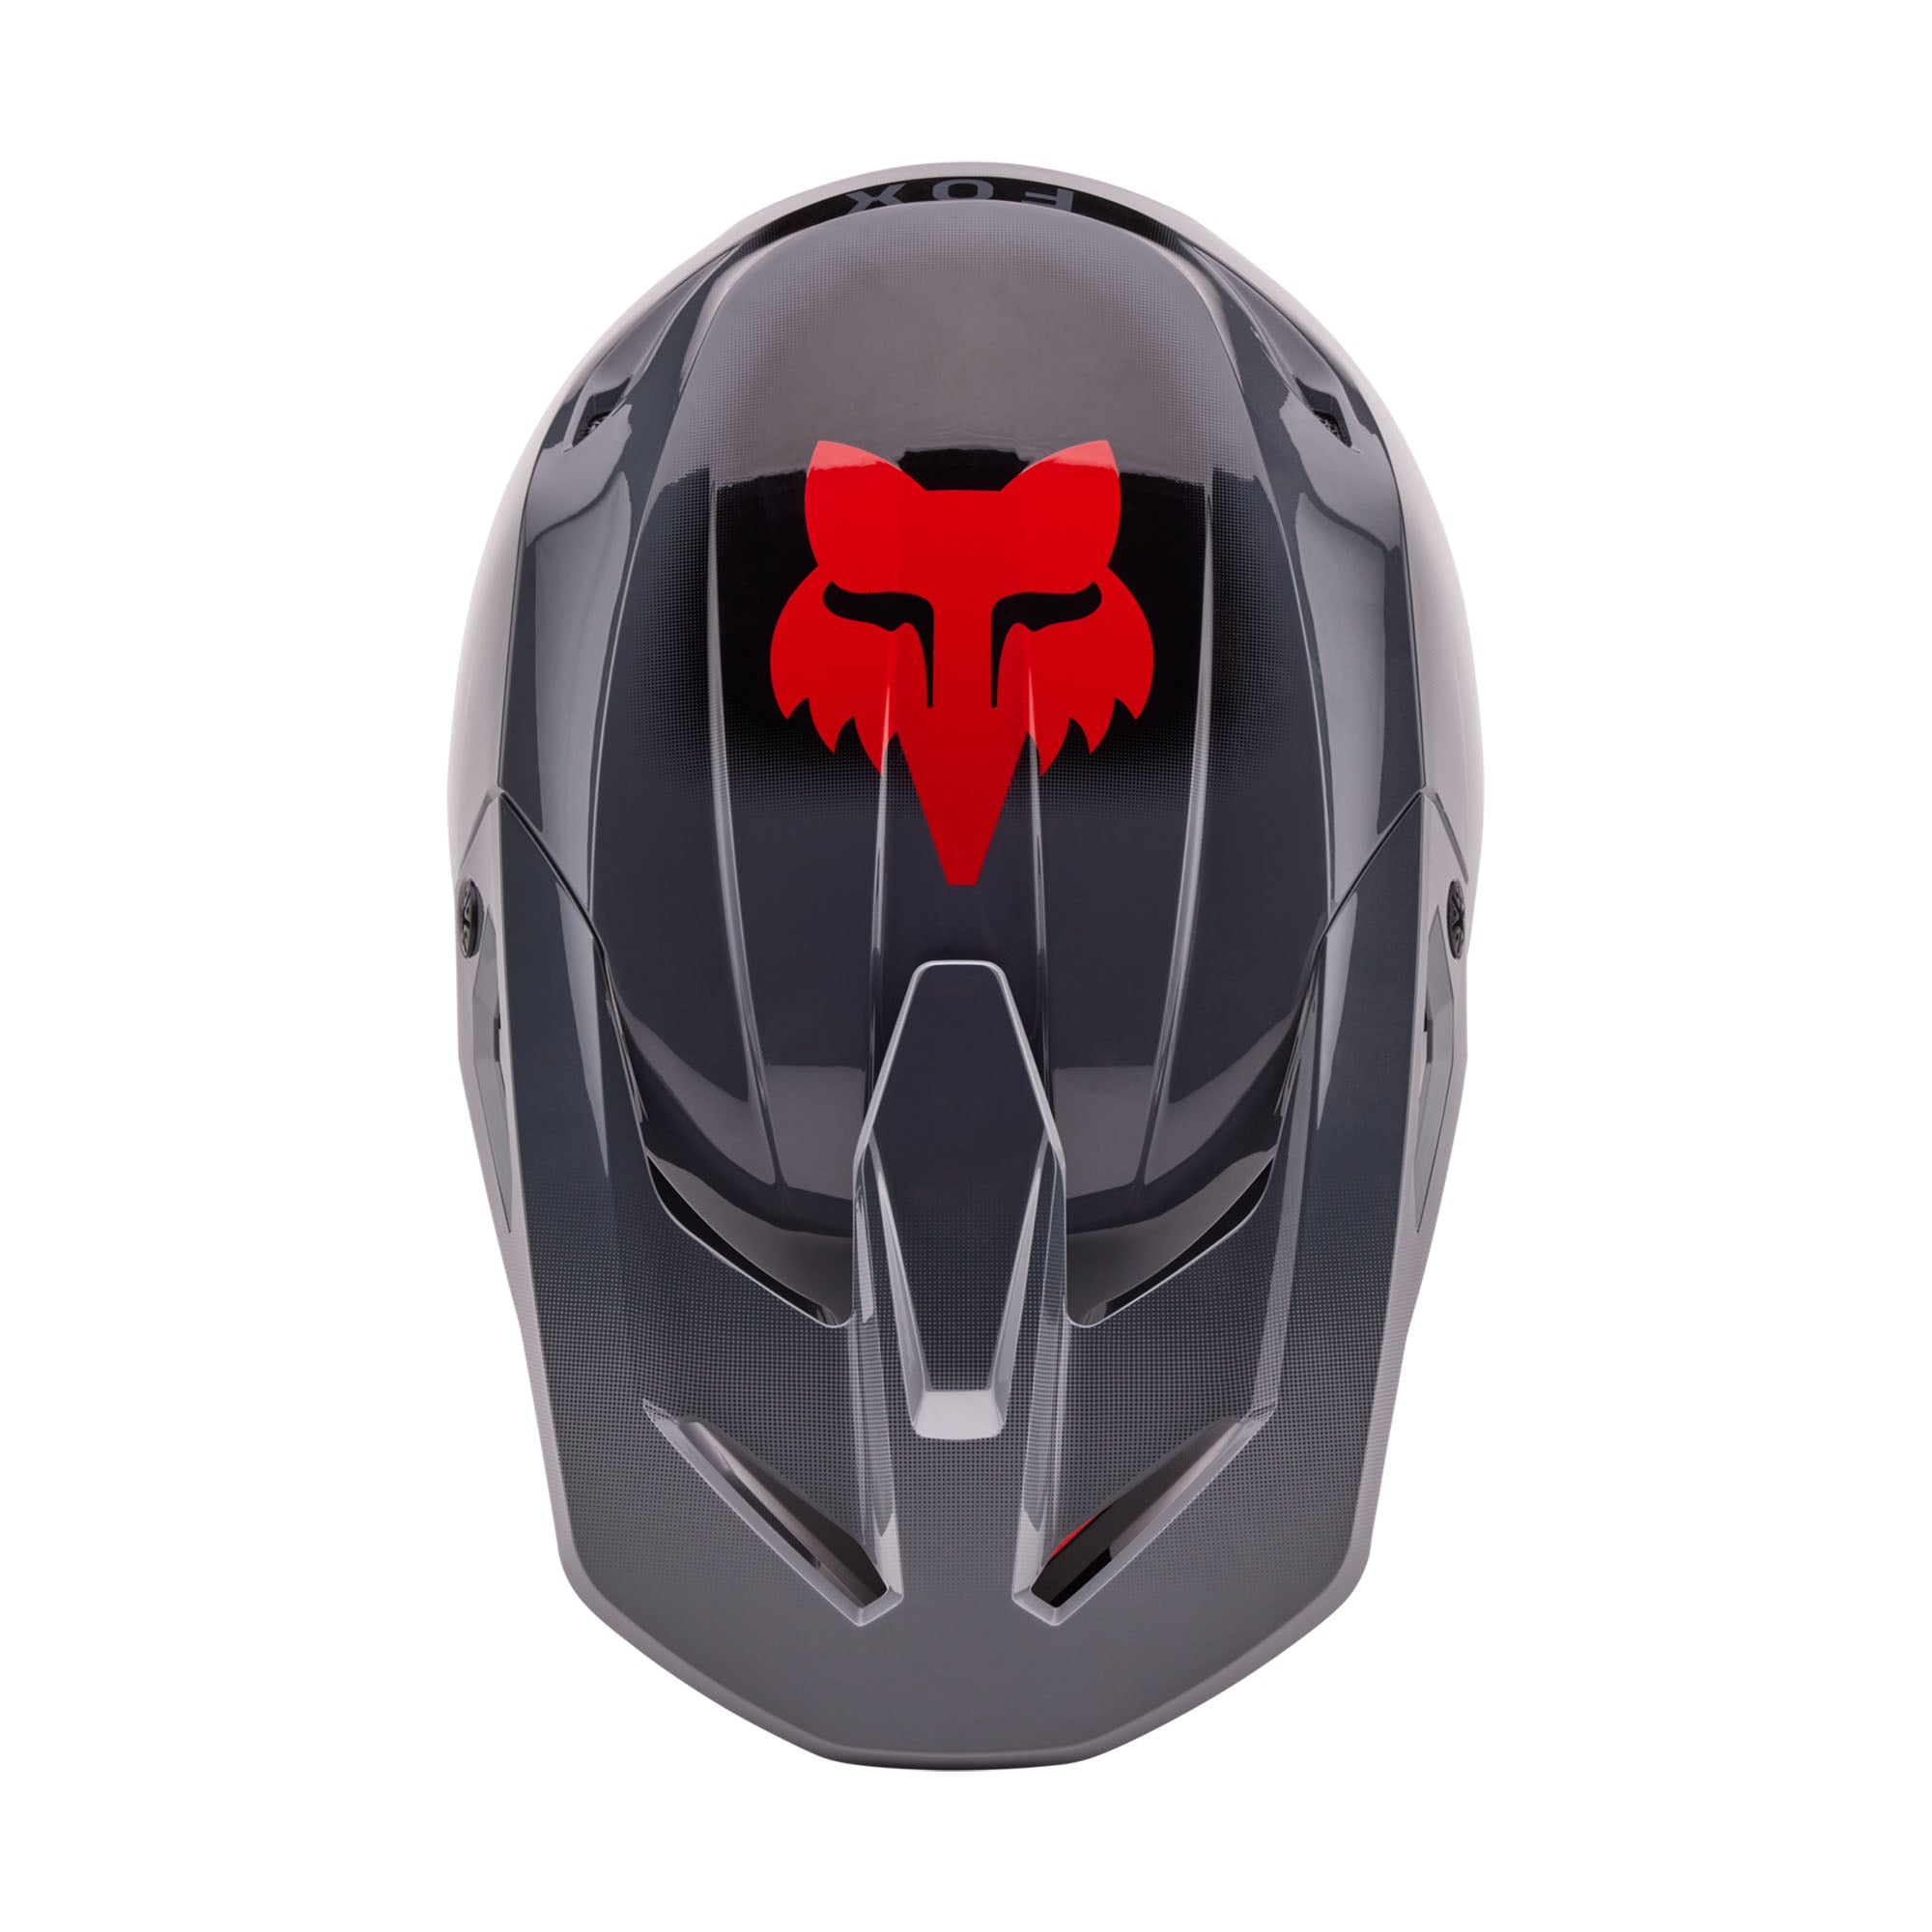 Fox Racing  V1 Interfere Helmet Open Face Vented Adjustable Visor Grey Red FMVSS 218